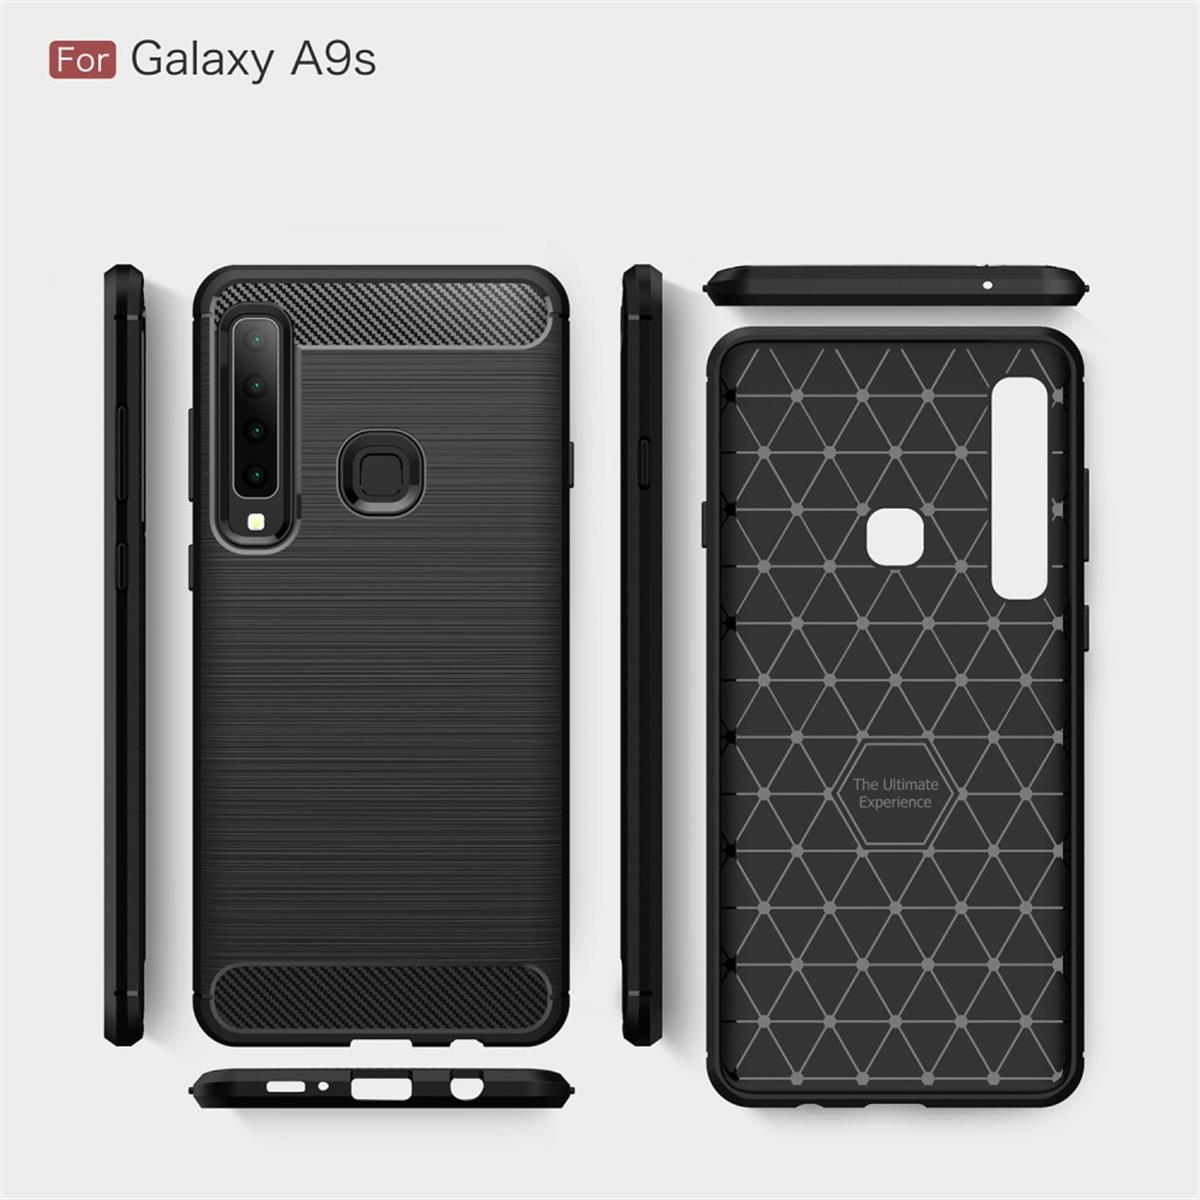 COVERKINGZ Handycase im Carbon Look, schwarz 2018, A9 Galaxy Samsung, Backcover